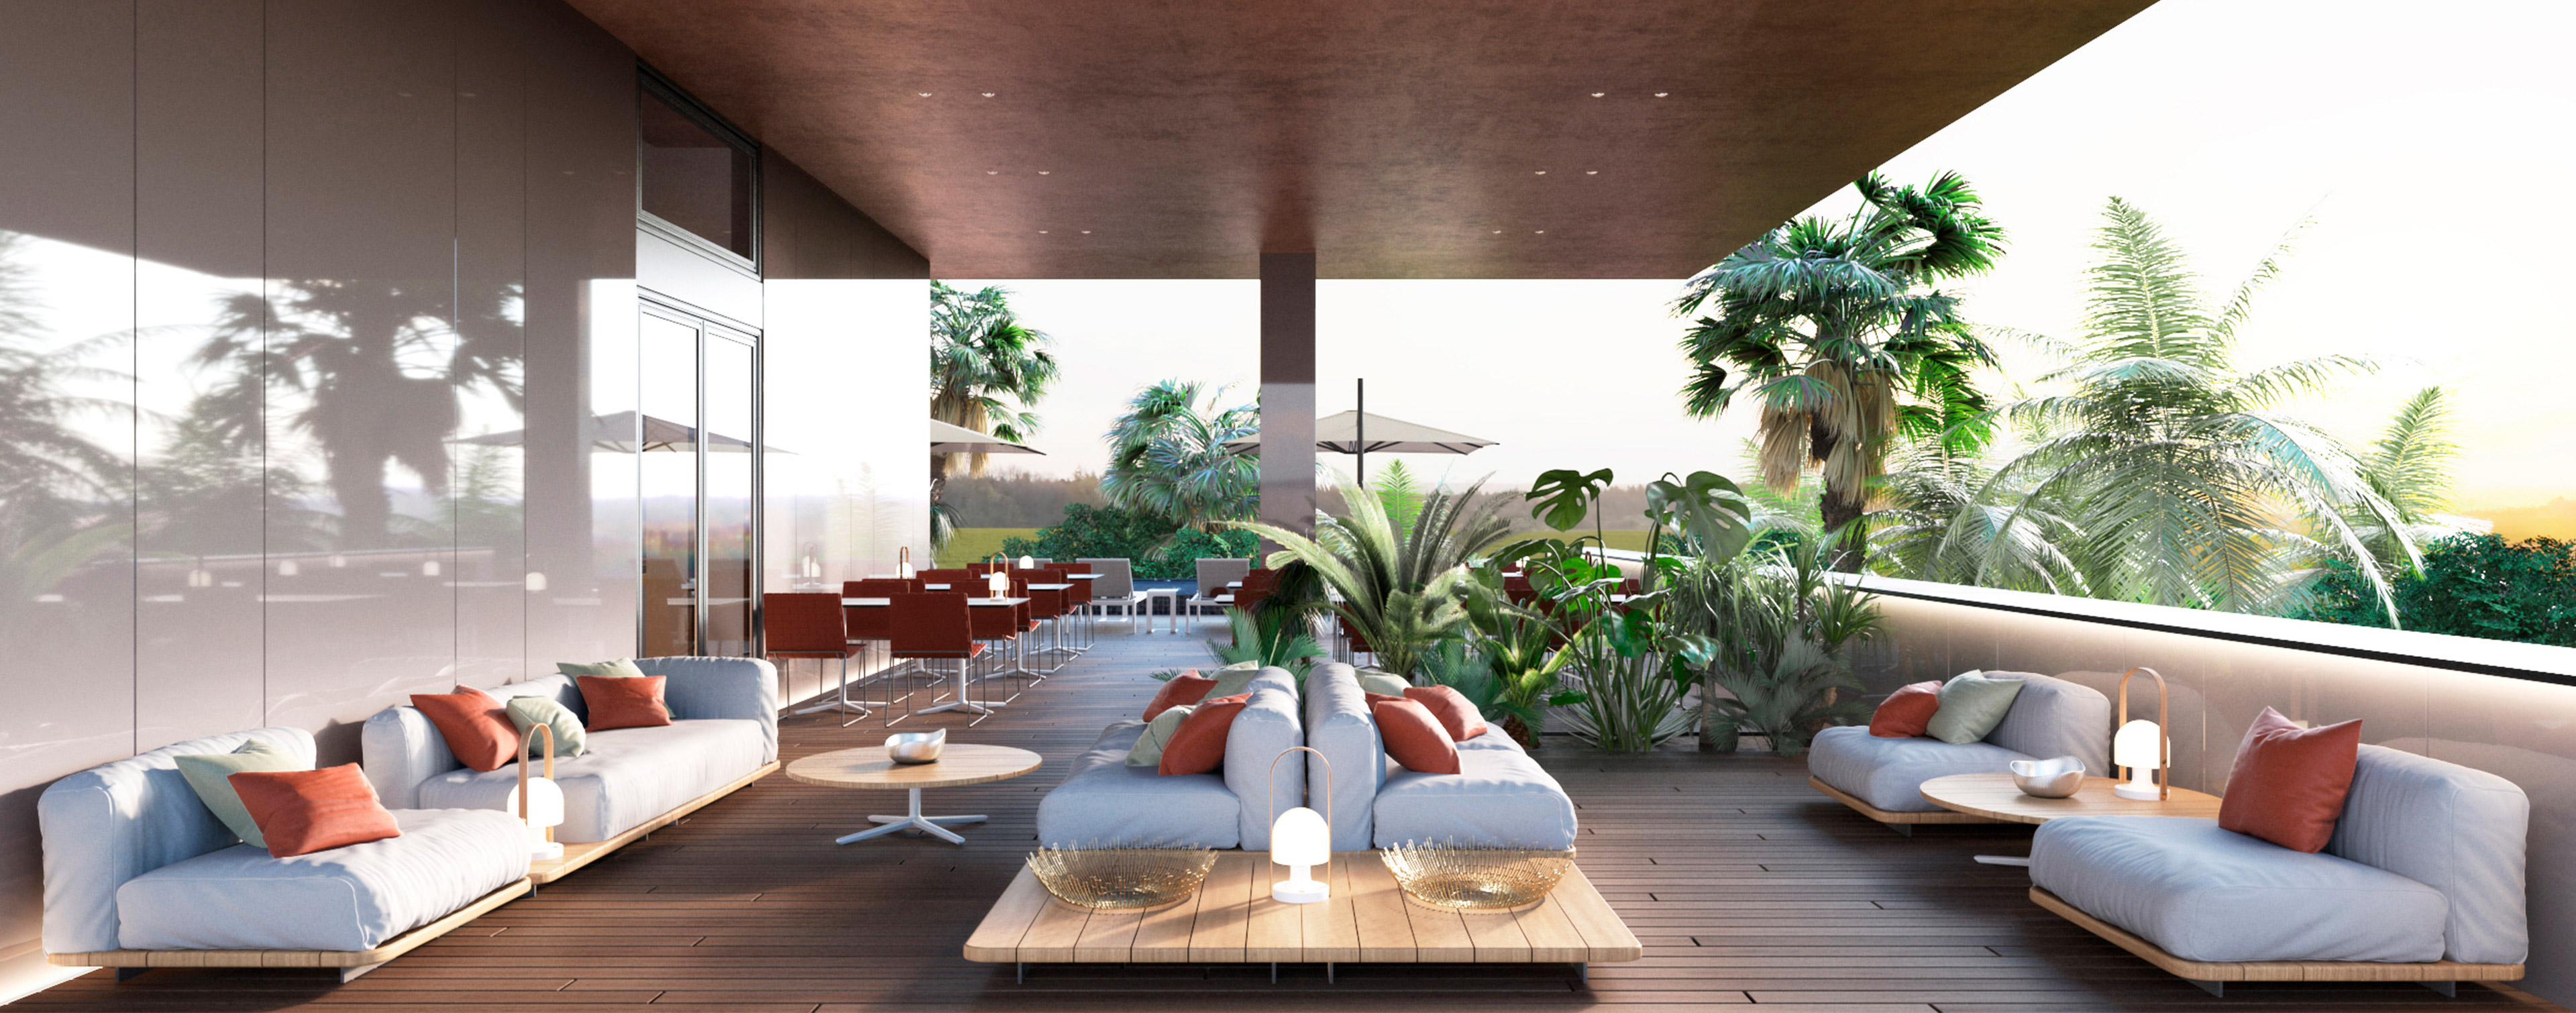 luv studio luxury architects dakkar yaas tower hotel building IMG 01 - LUV Studio - Arquitectura y diseño - Barcelona